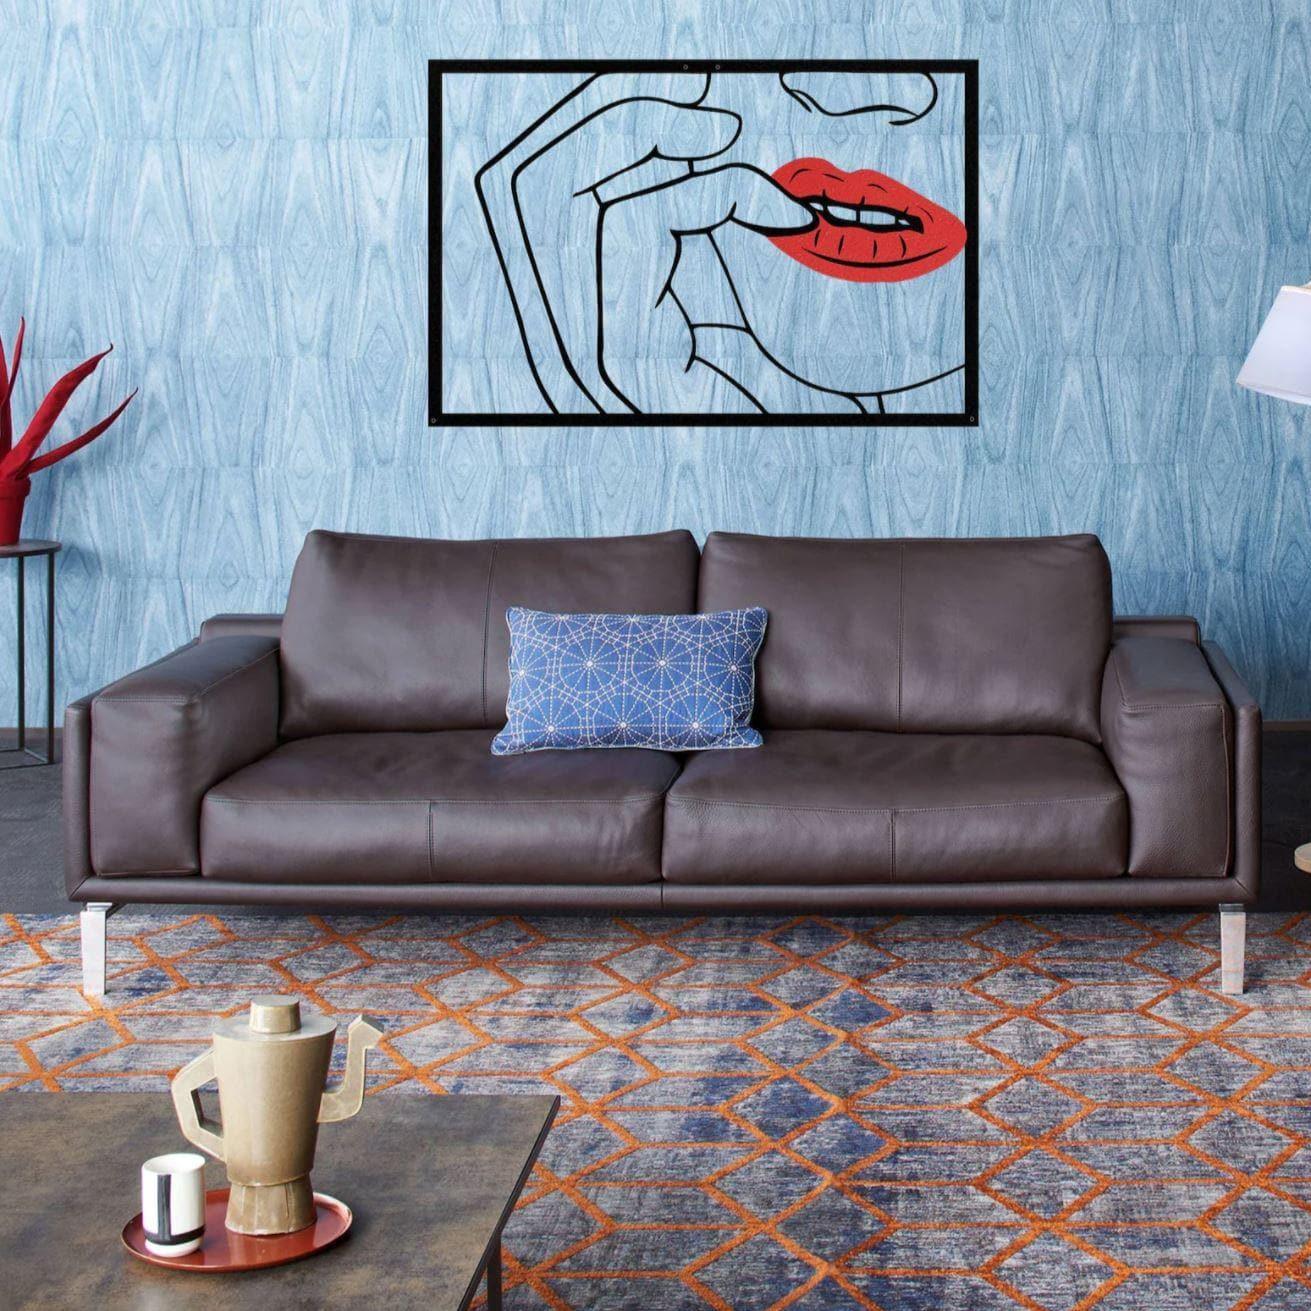 Sexy Red Lips Minimalist Wall Art - MAIA HOMES